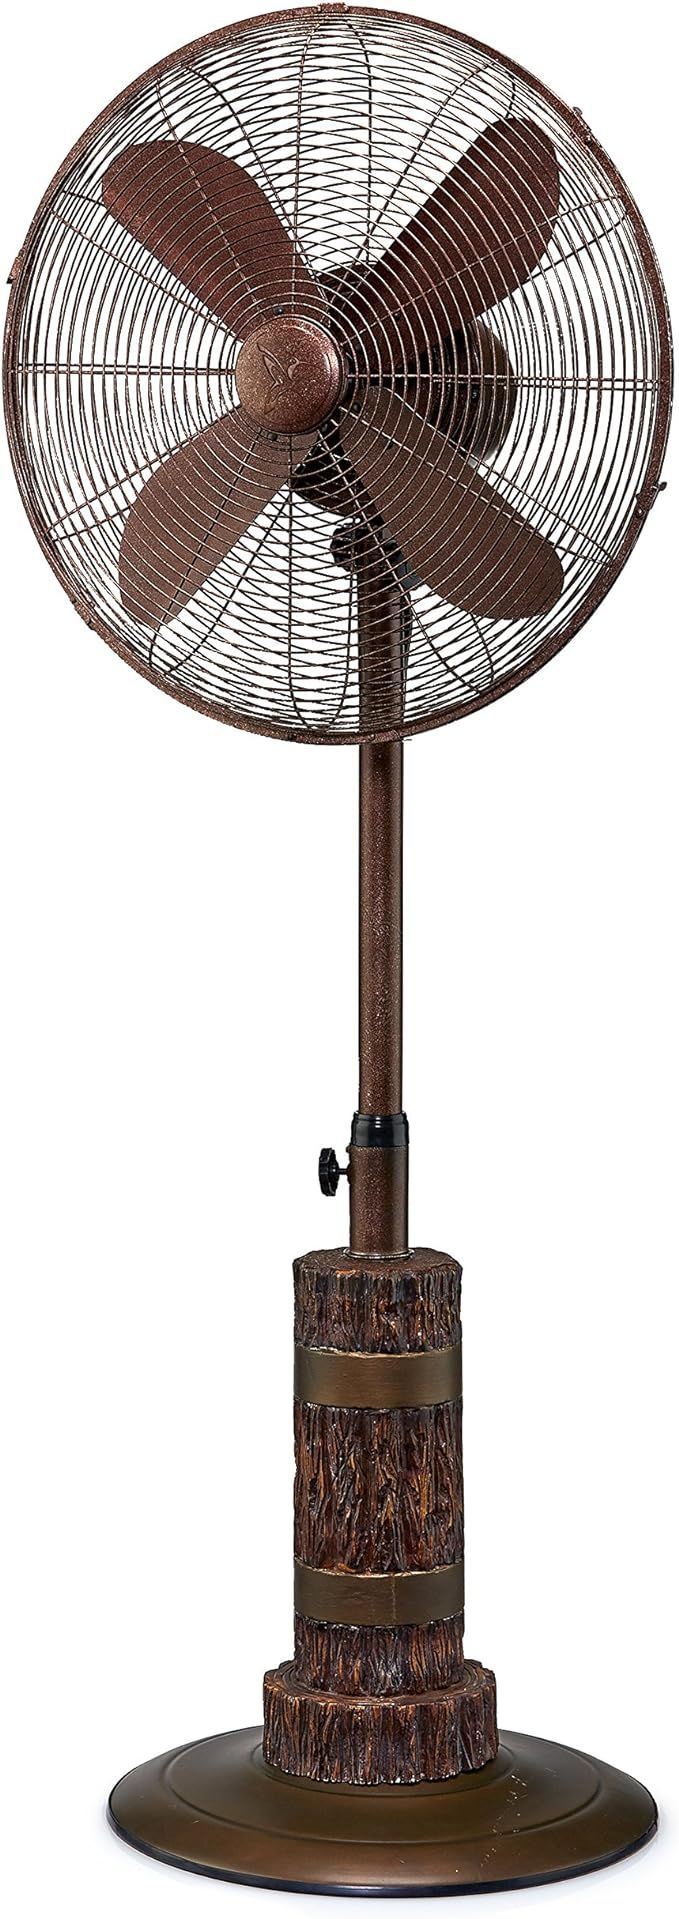 Designer Aire Oscillating Indoor/Outdoor Standing Floor Fan for Cooling Your Area Fast - 3-Speeds... | Amazon (US)